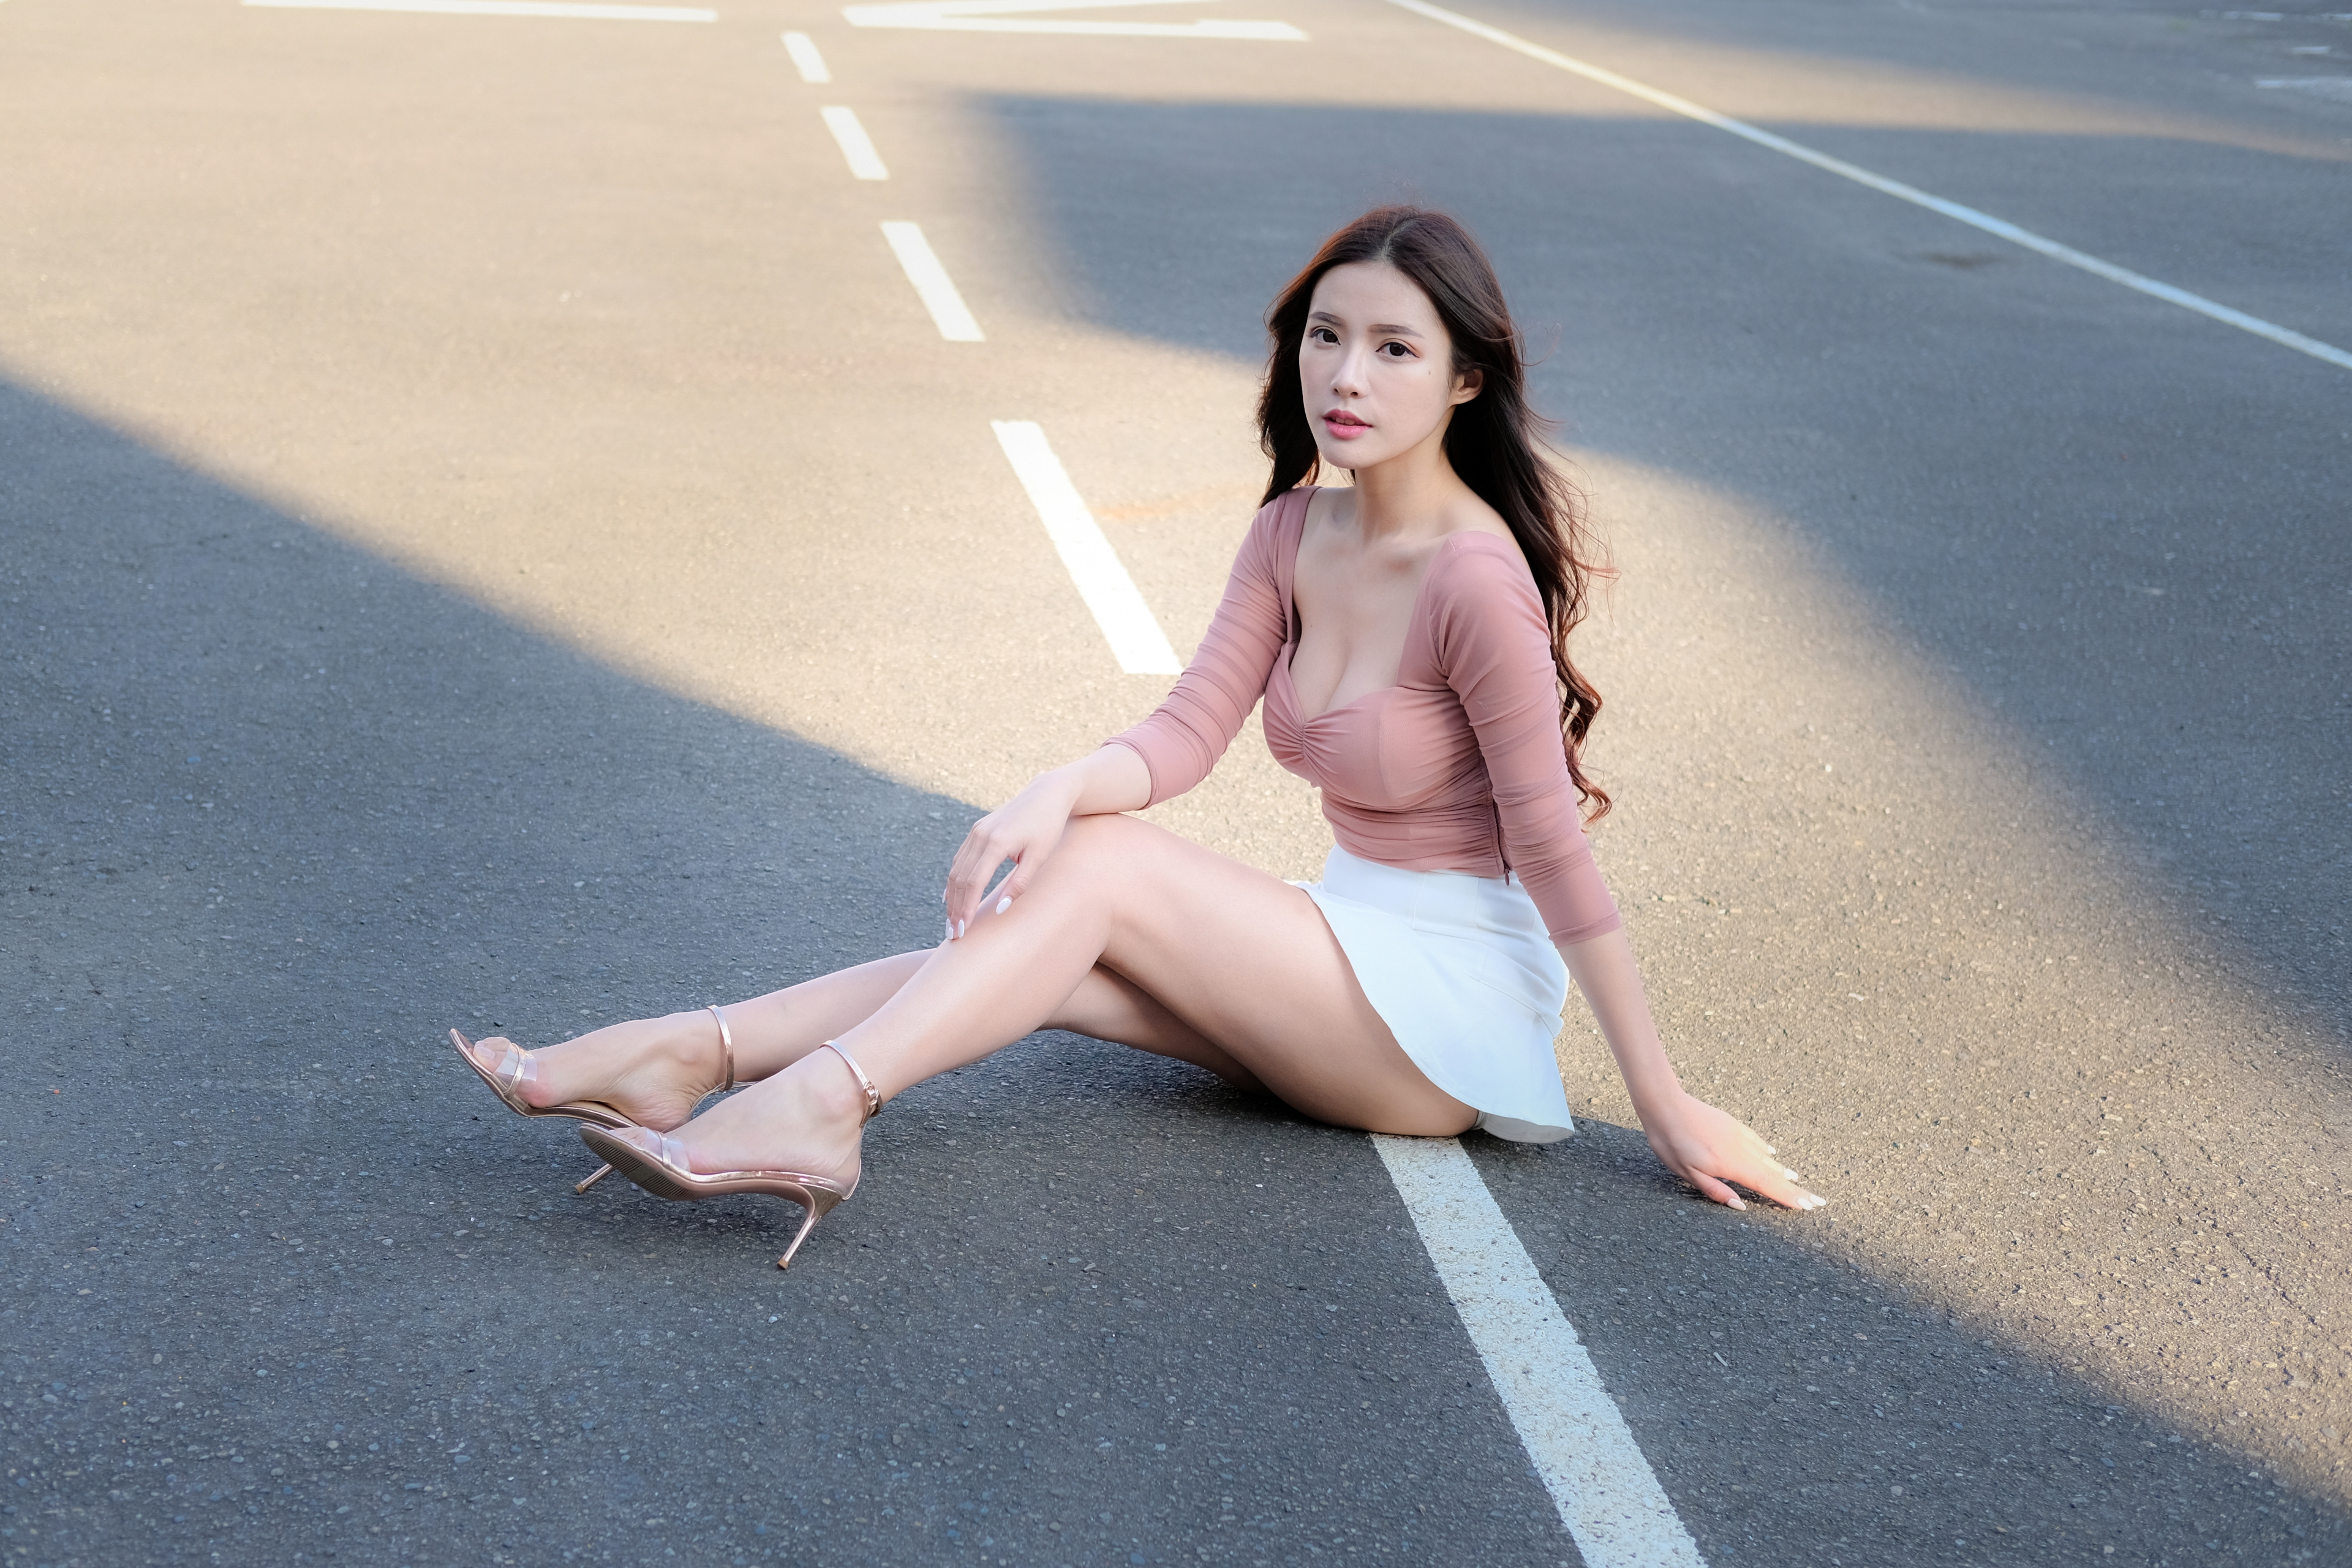 Vivi Babier Women Model Brunette Asian Looking At Viewer Parted Lips Pink Tops Ankle Strap Heels Sit 3840x2560